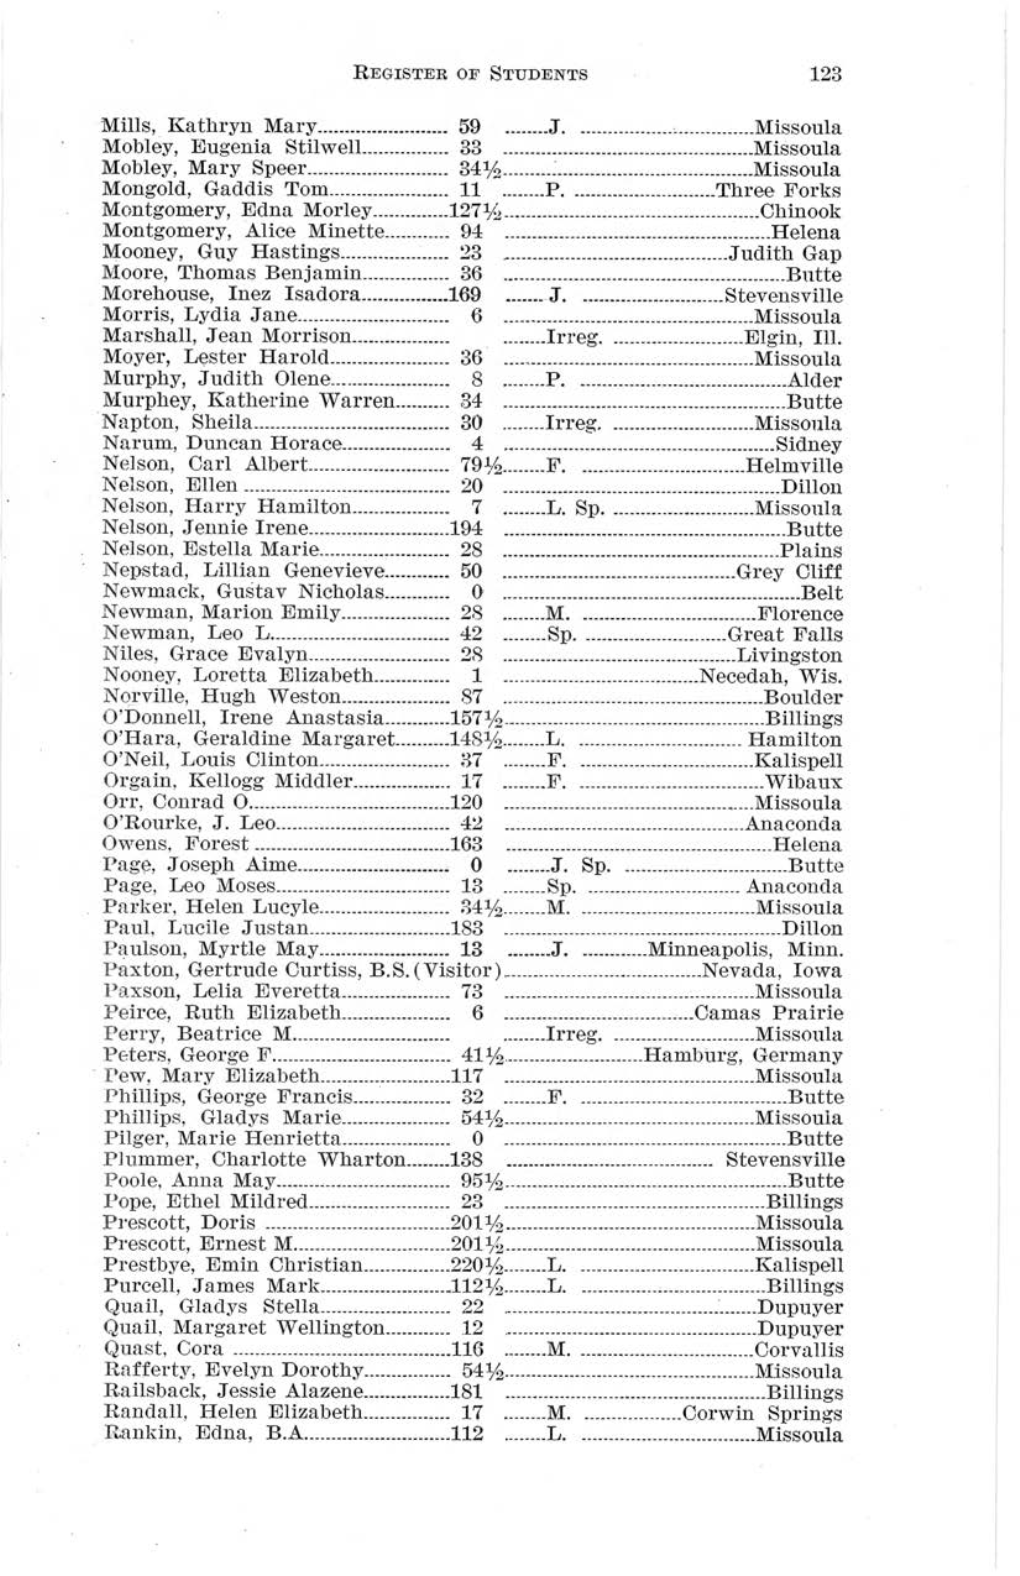 Course Catalog, 1917-1918